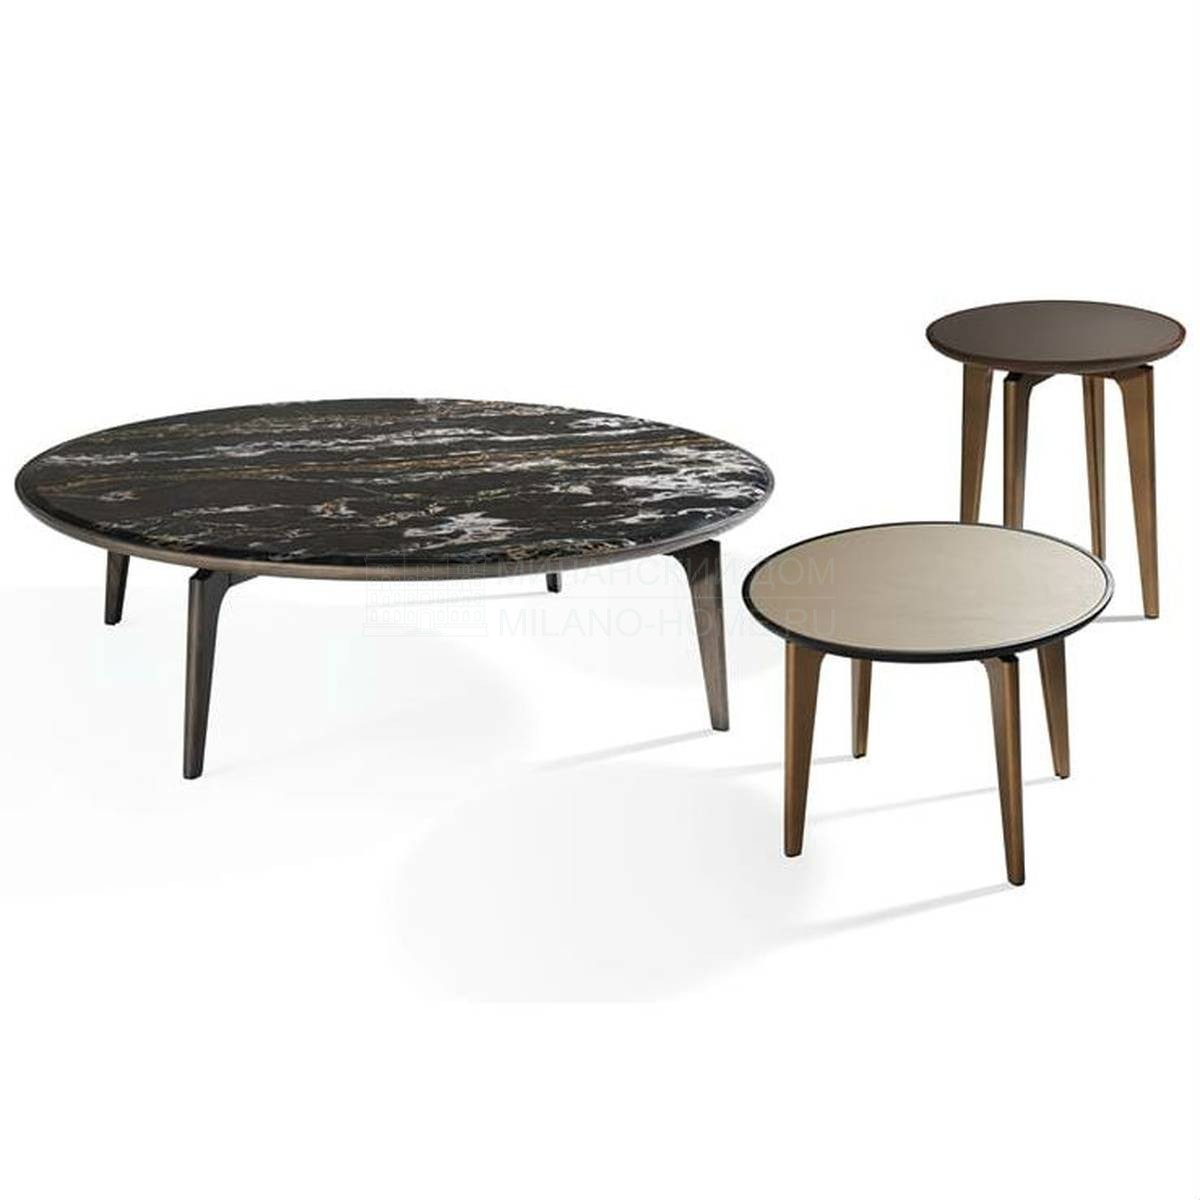 Кофейный столик Blend round coffee table из Италии фабрики GIORGETTI